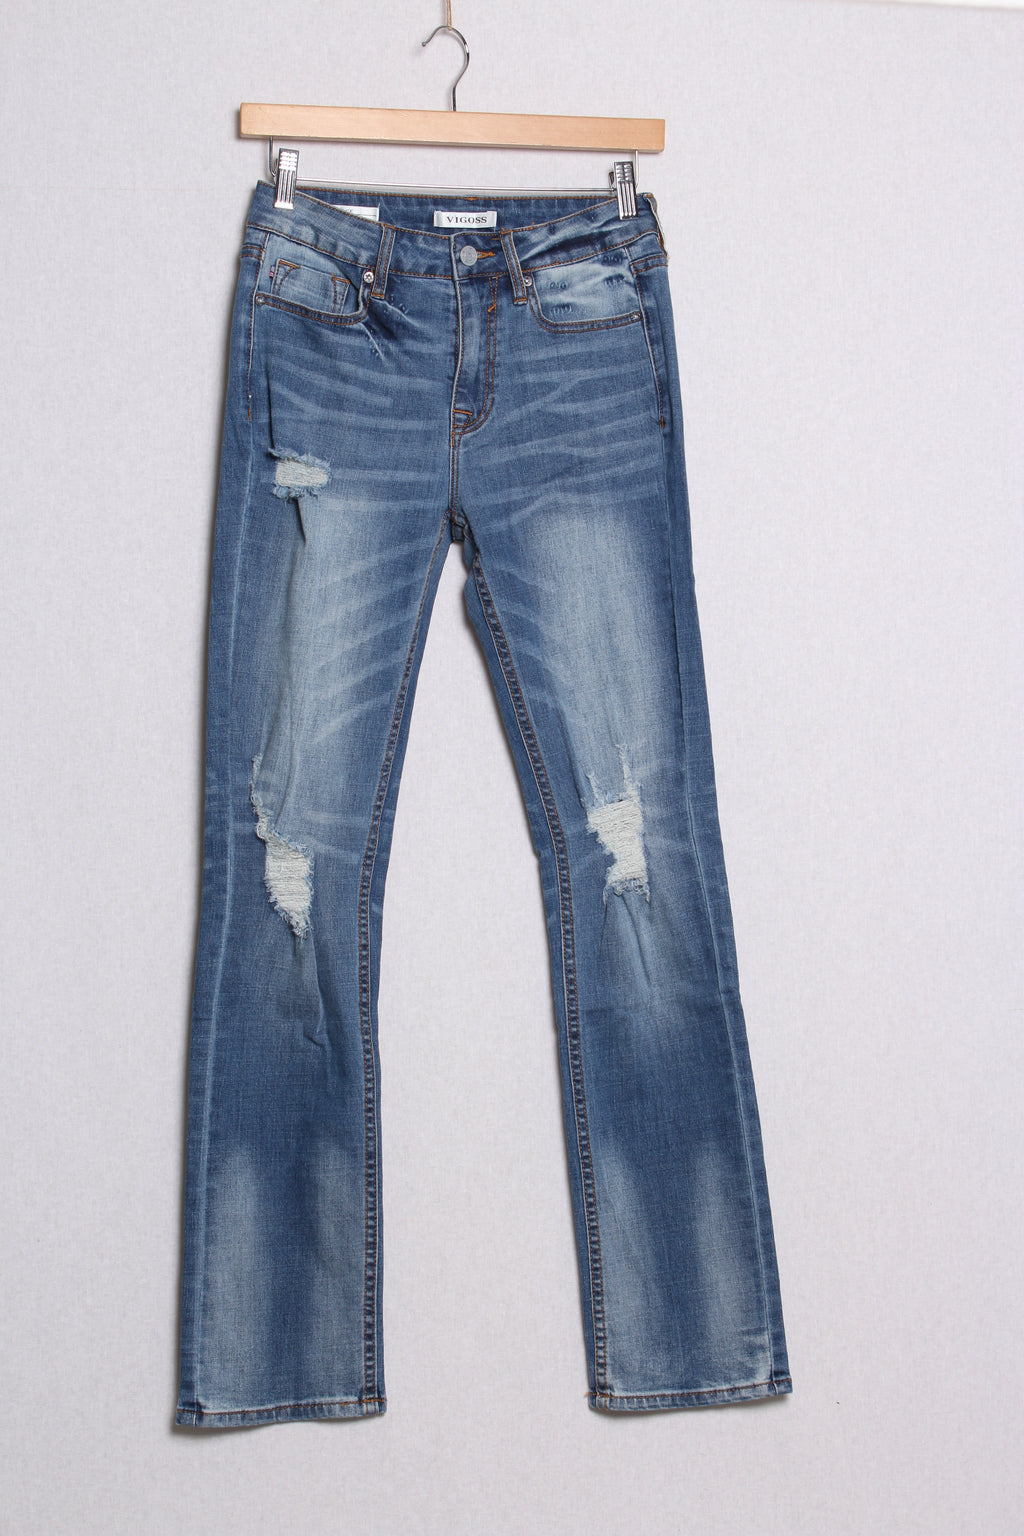 Women's High Waisted Semi Tattered Skinny Jeans